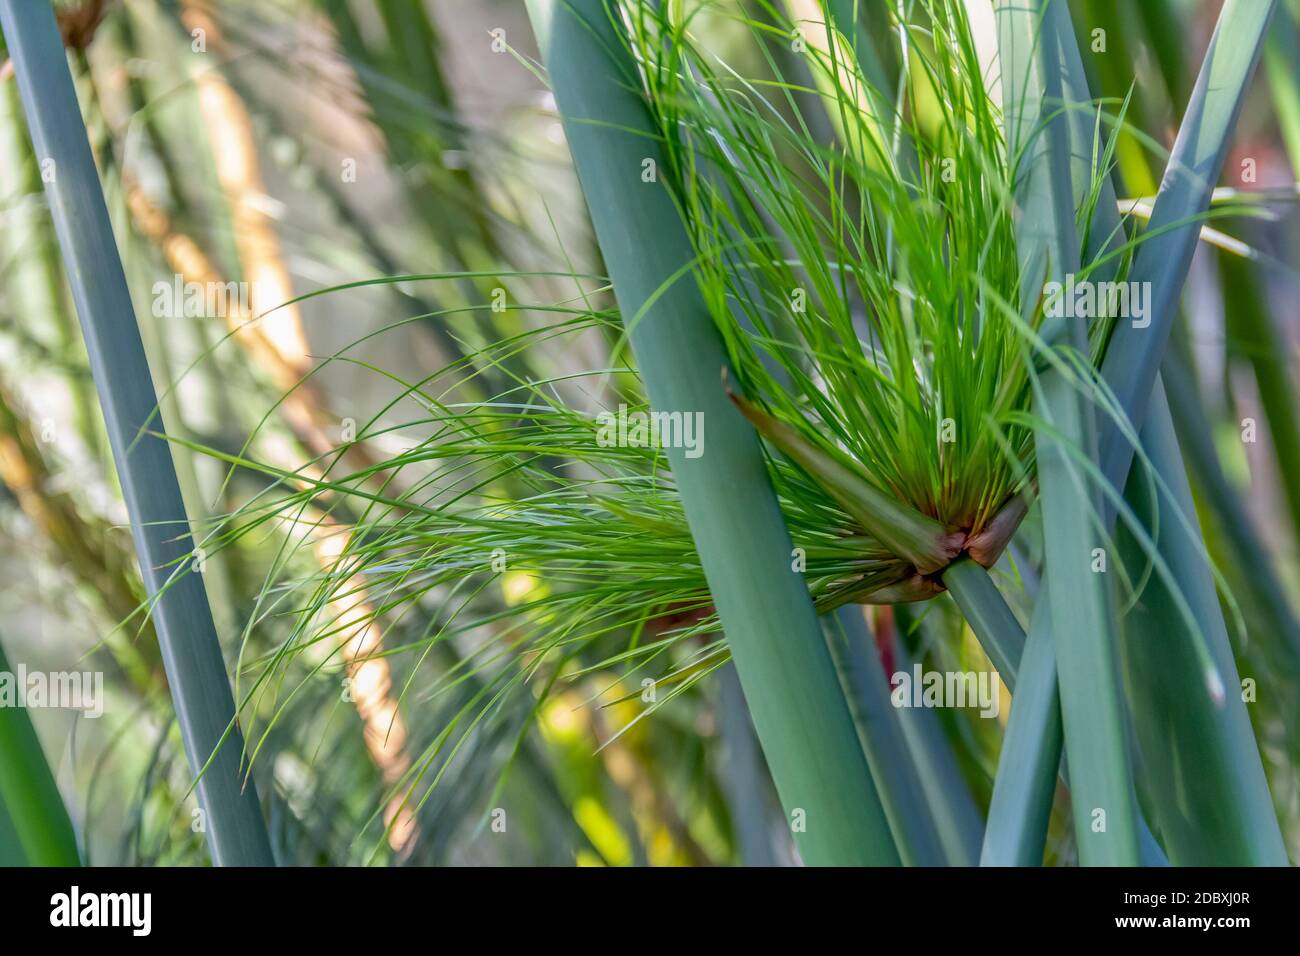 full frame closeup shot showing some nile grass vegetation Stock Photo